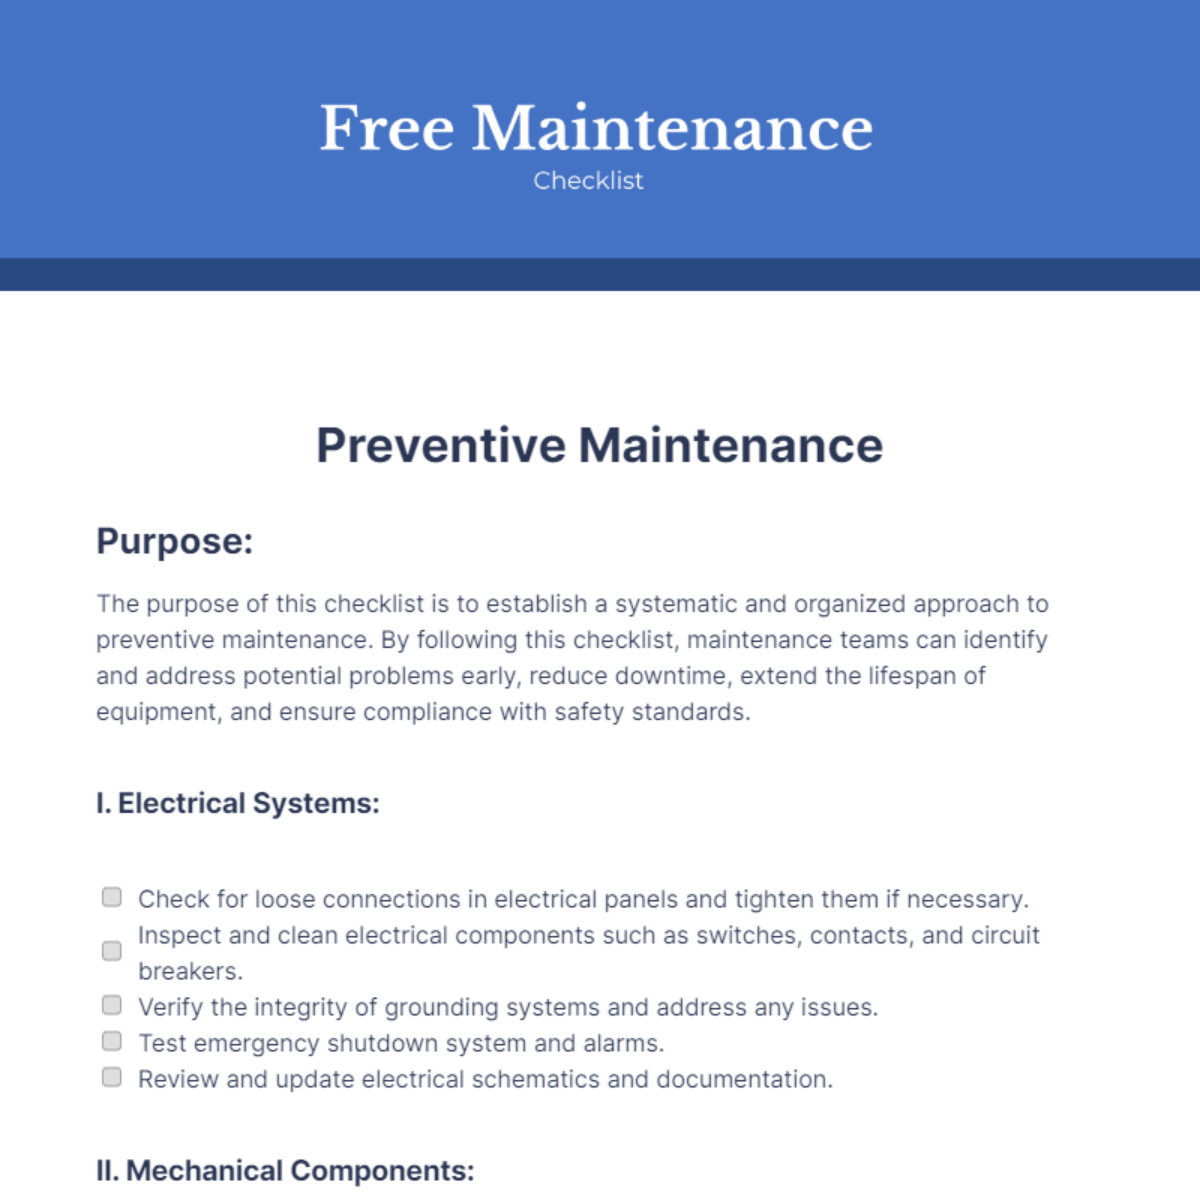 Maintenance Checklist Template